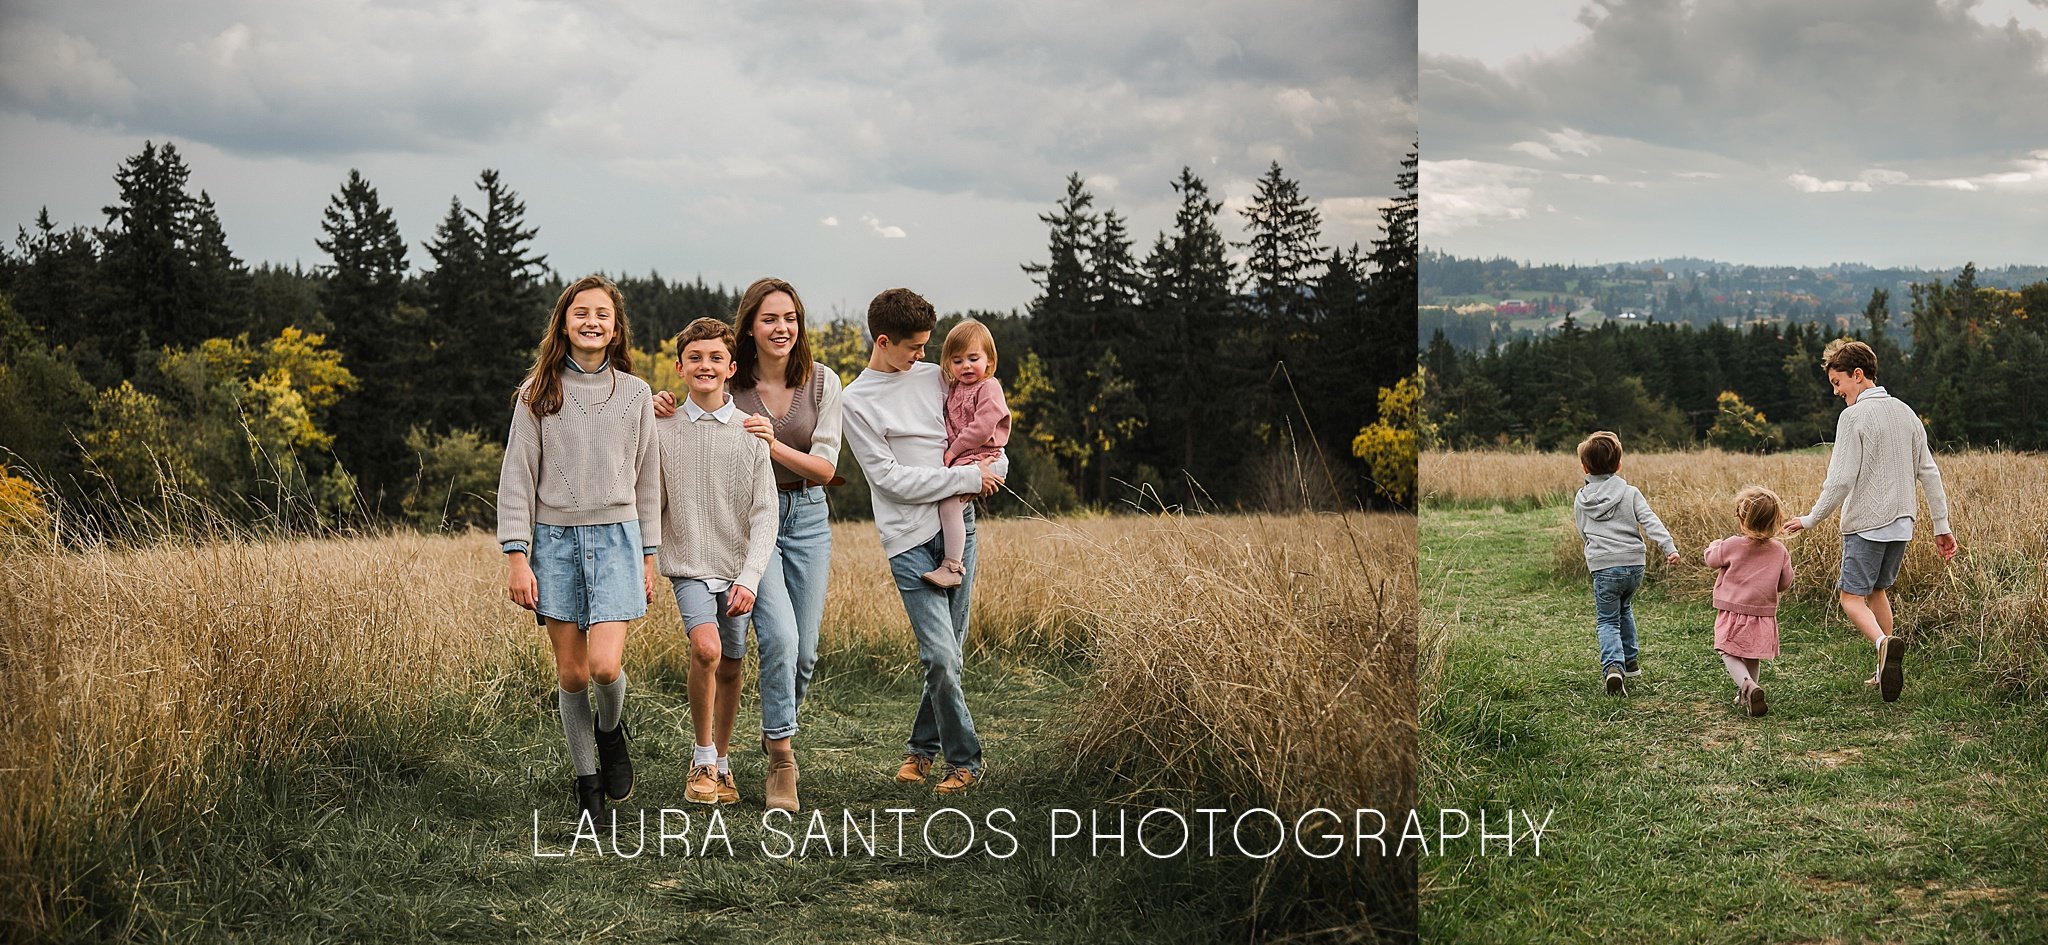 Laura Santos Photography Portland Oregon Family Photographer_2963.jpg